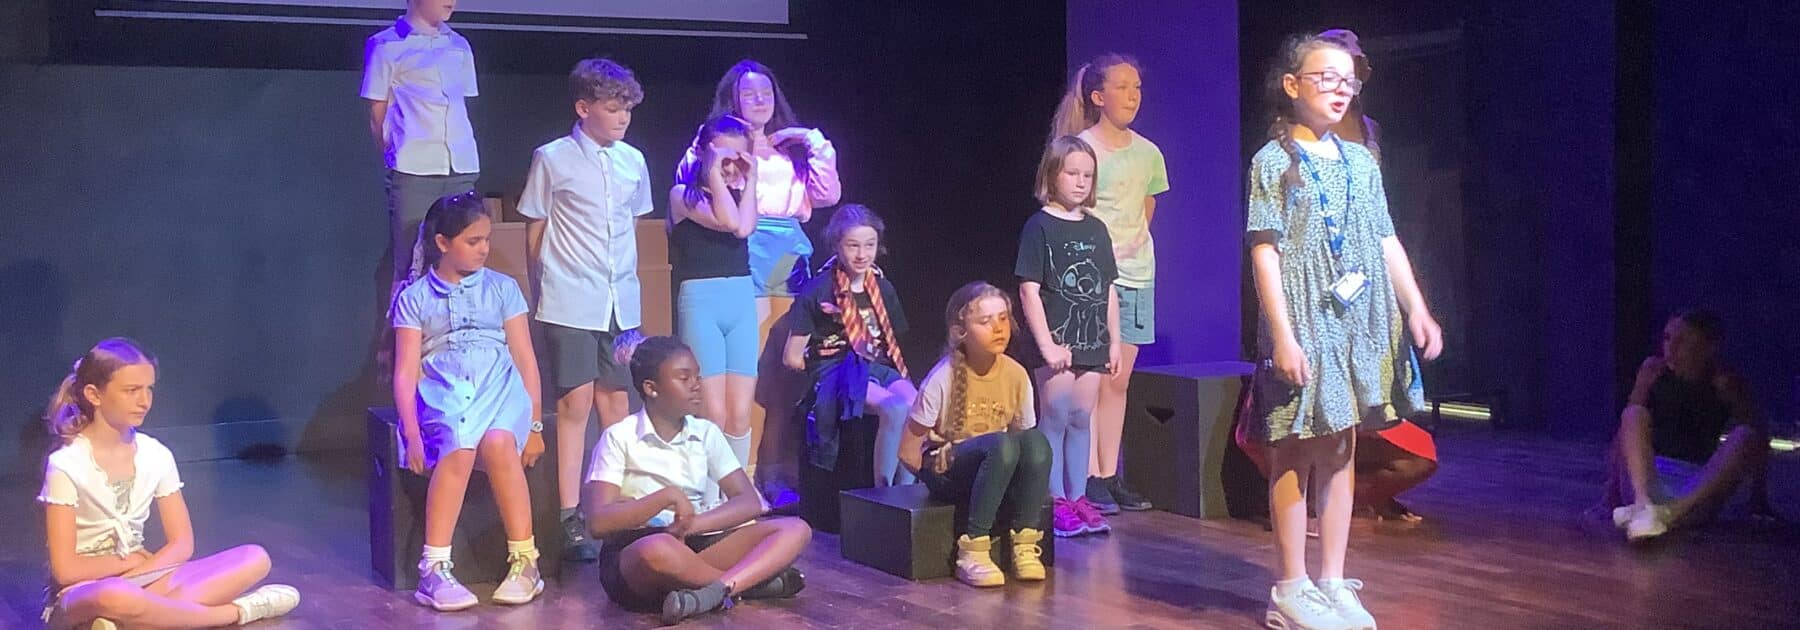 Primary School Drama Club Performance!